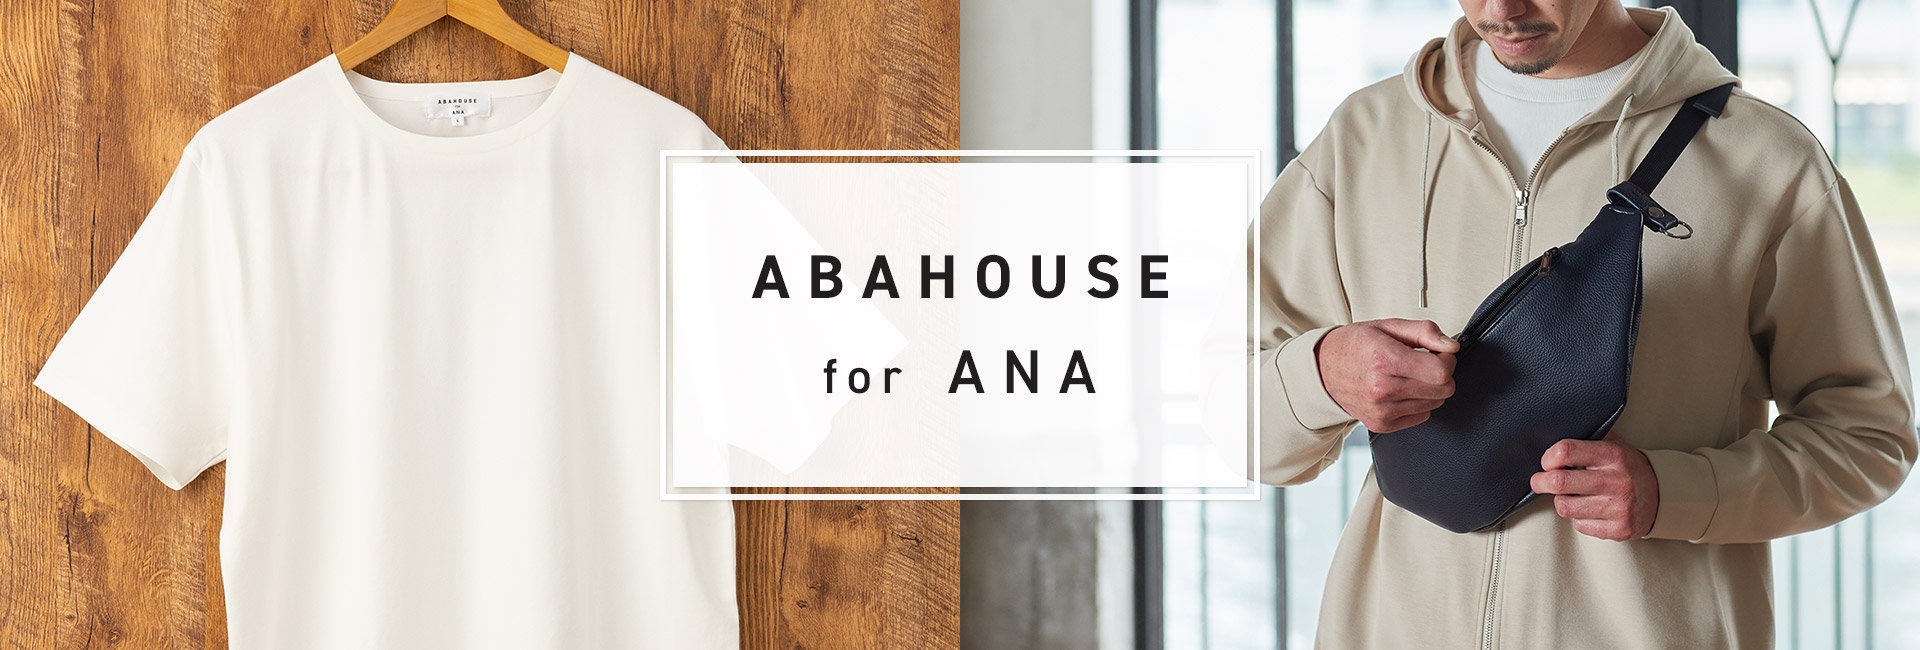 ABAHOUSE for ANA